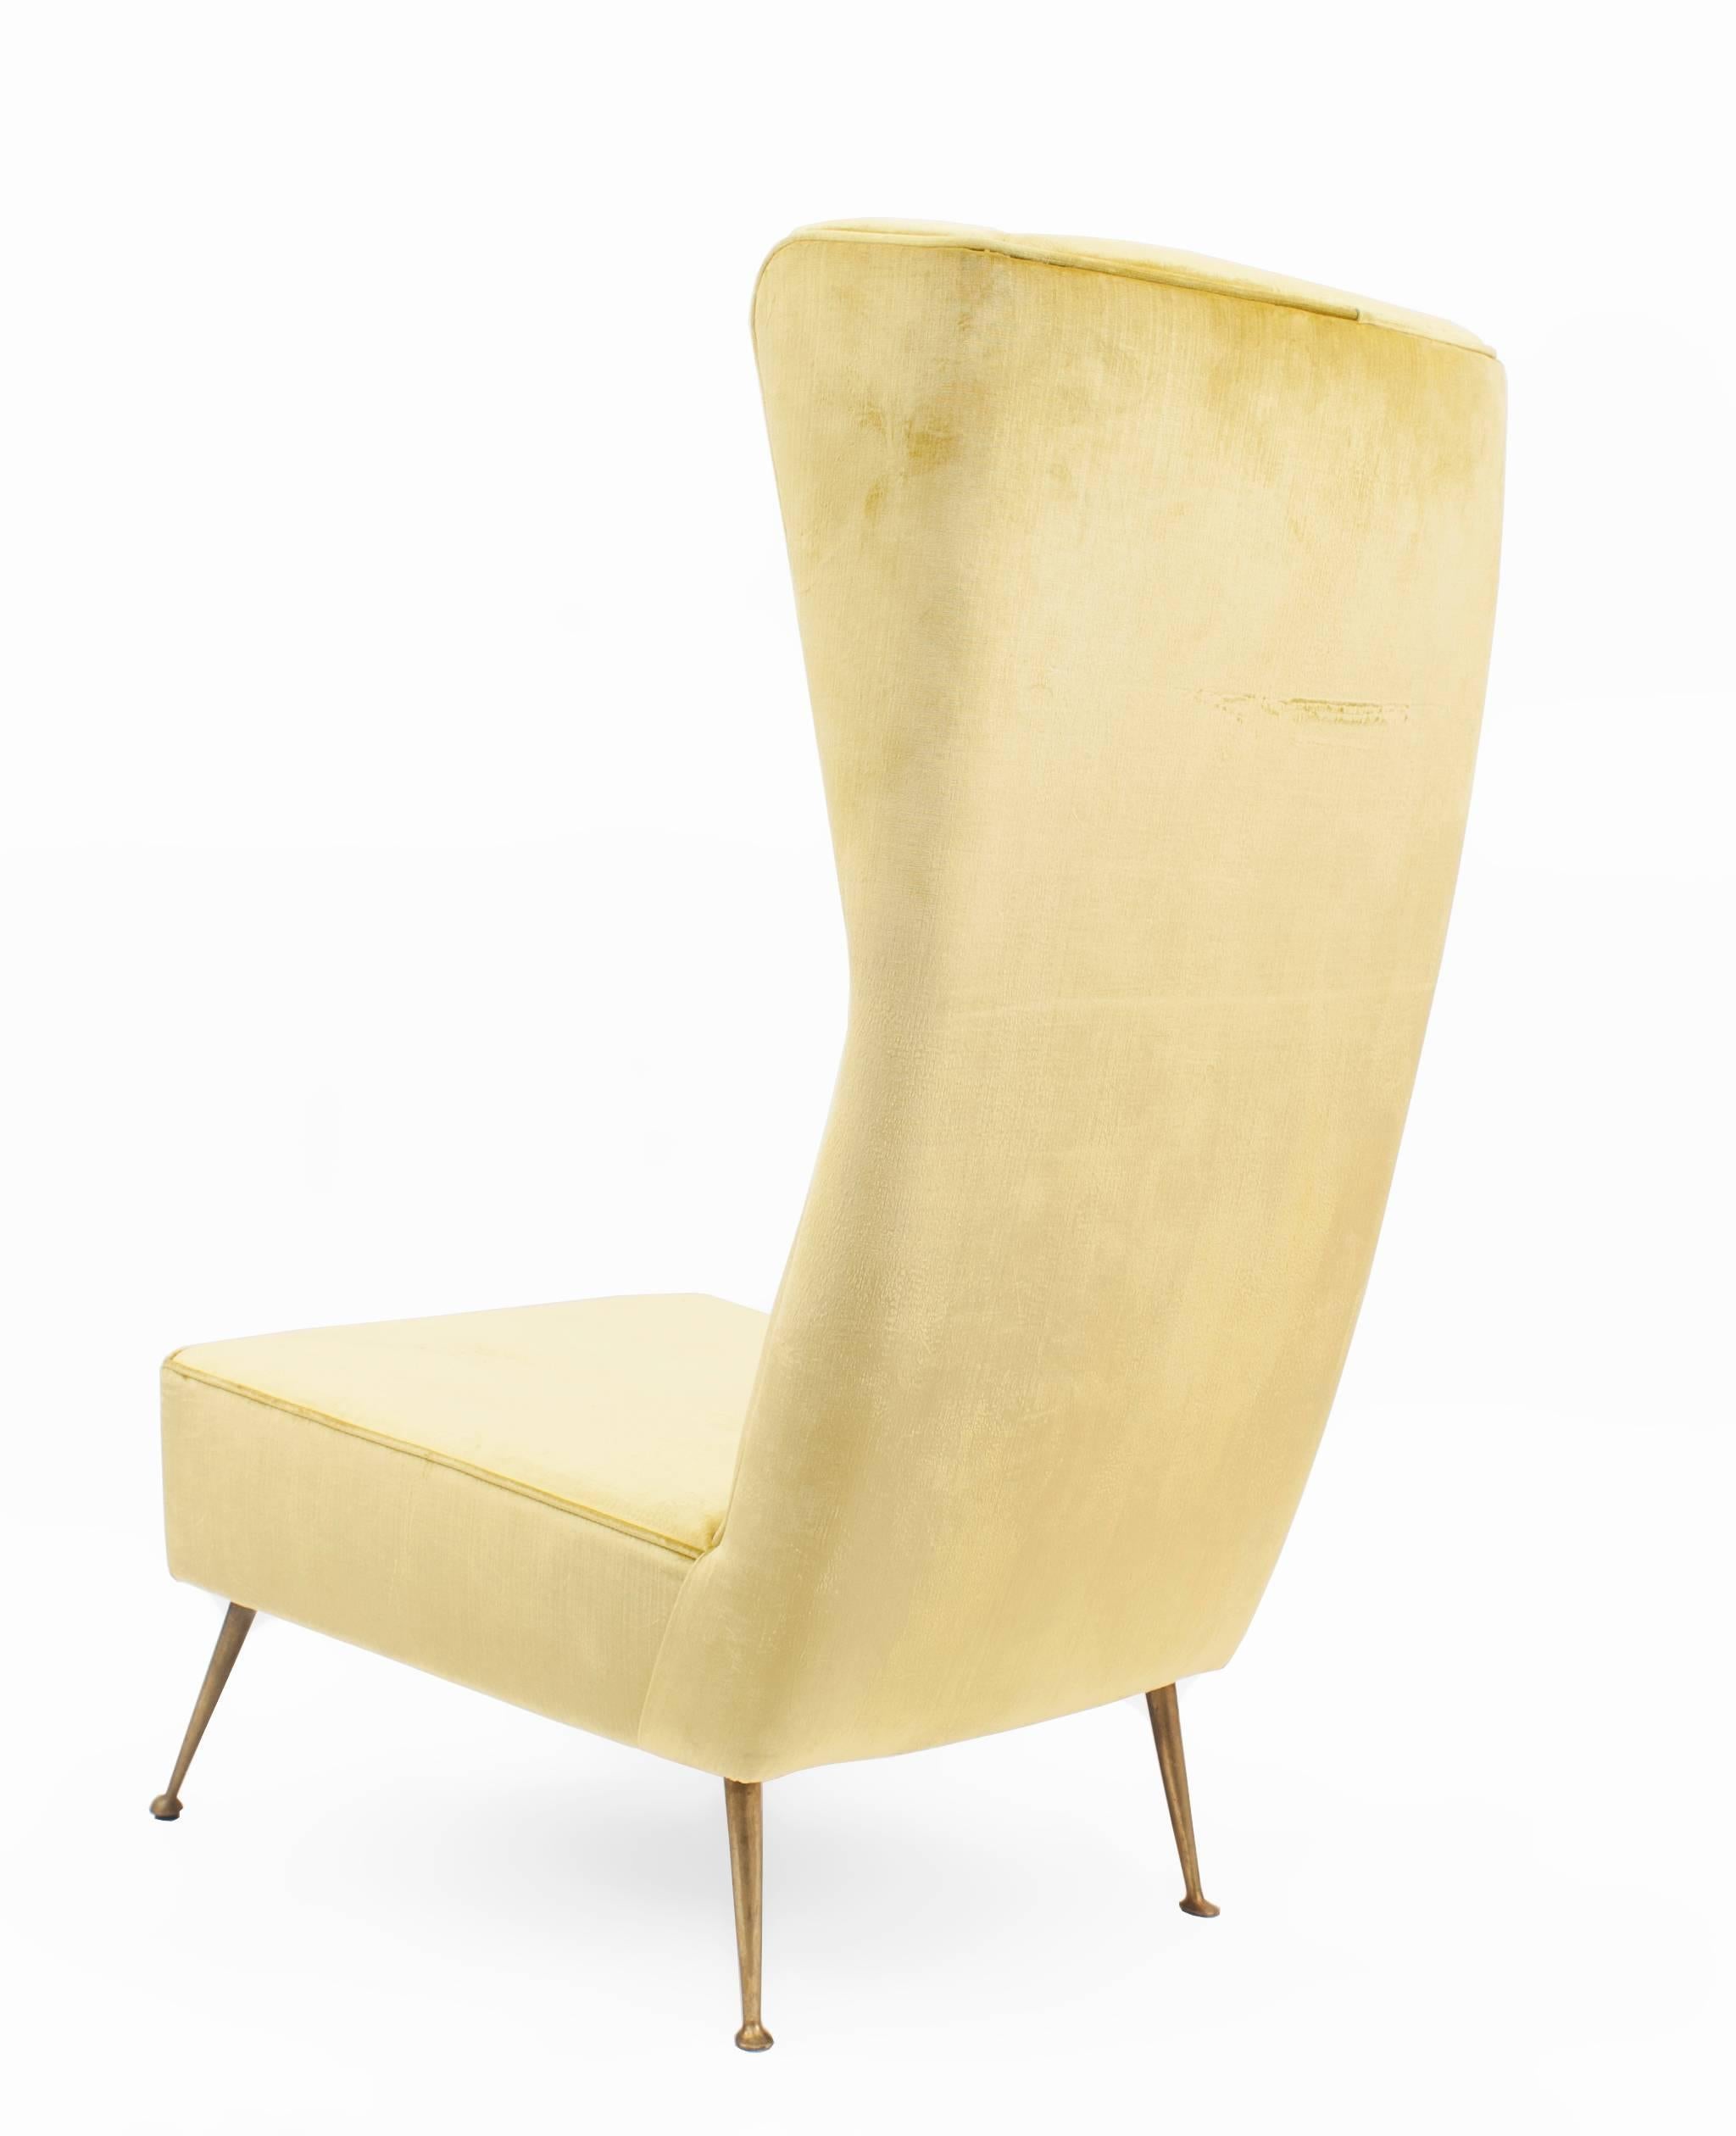 postwar design chairs italy